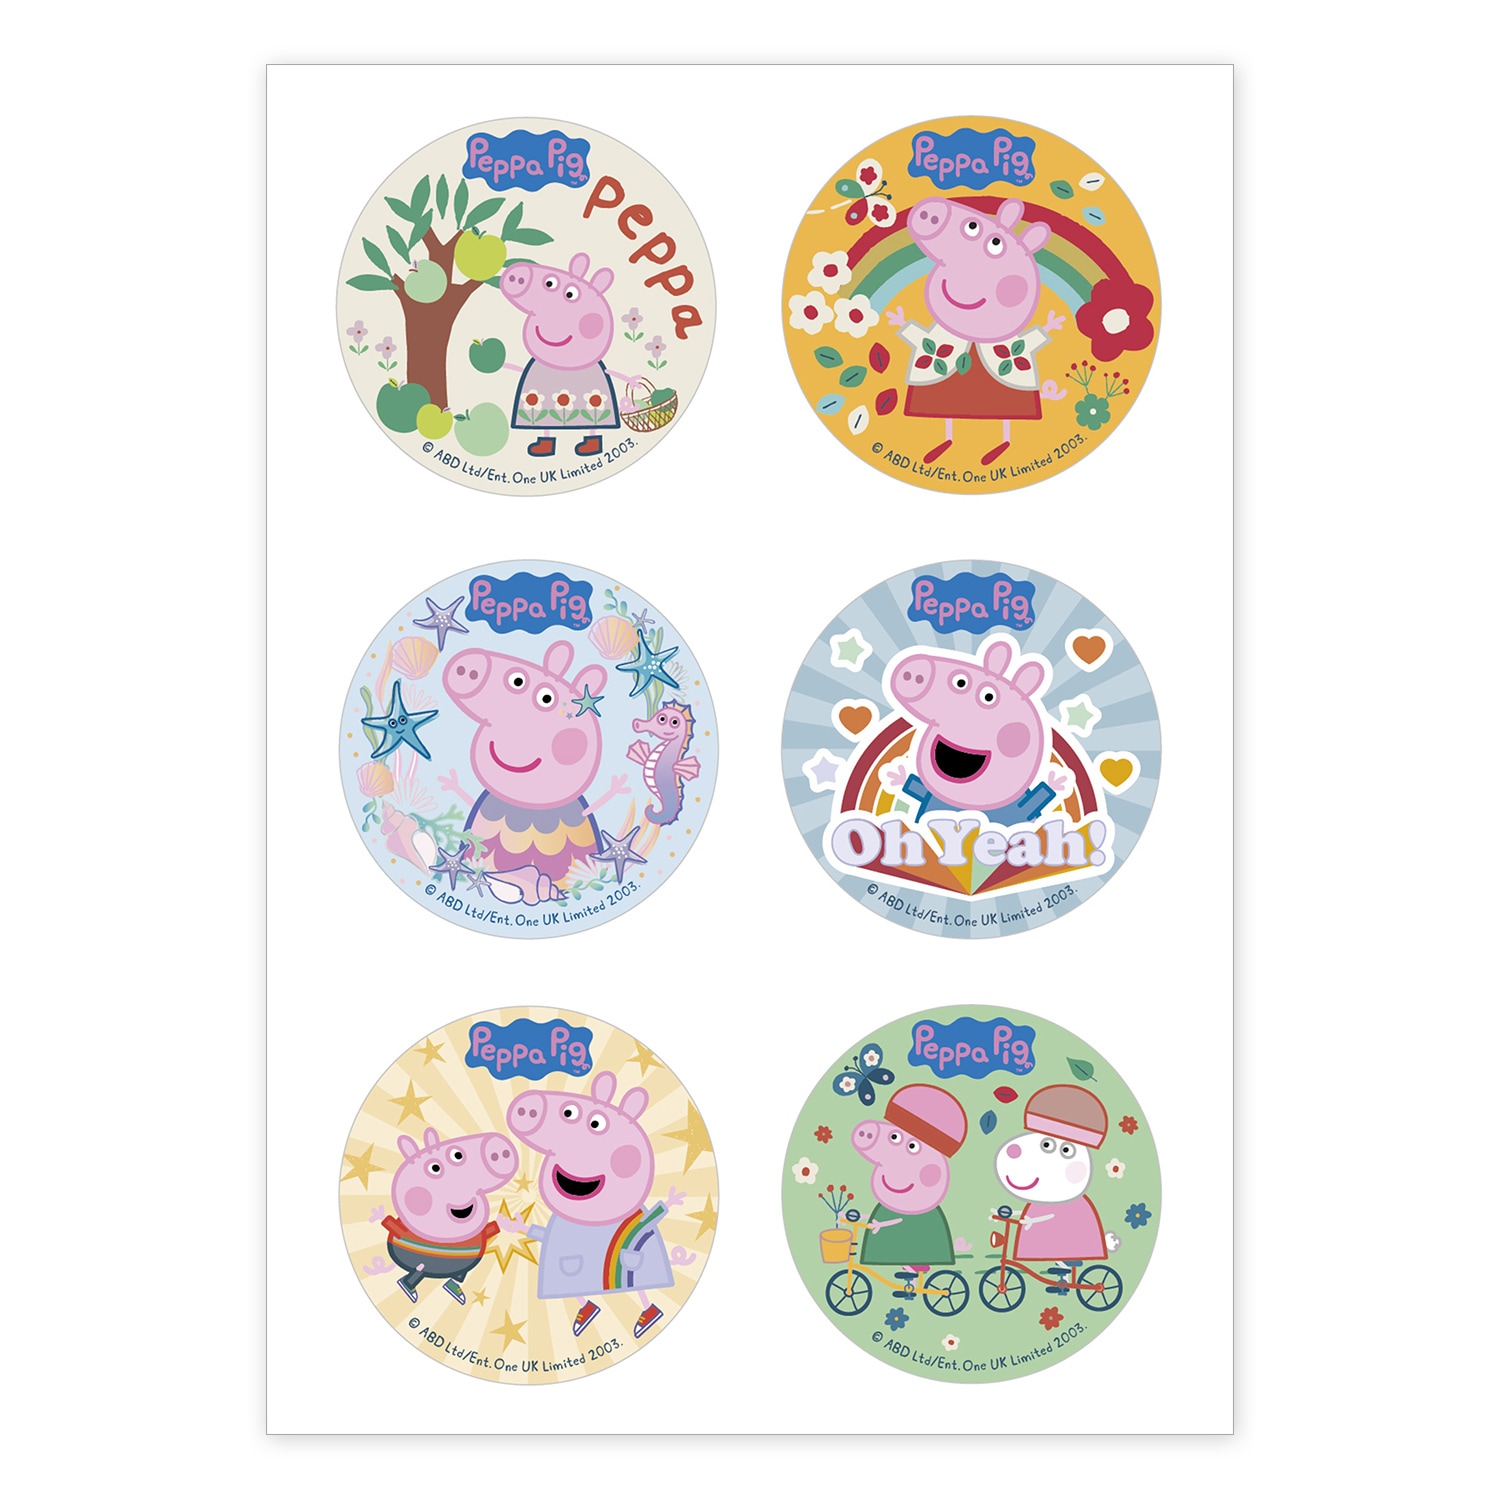 Peppa Pig - Eetbare Cupcake Decoraties Fondant 6 stuks